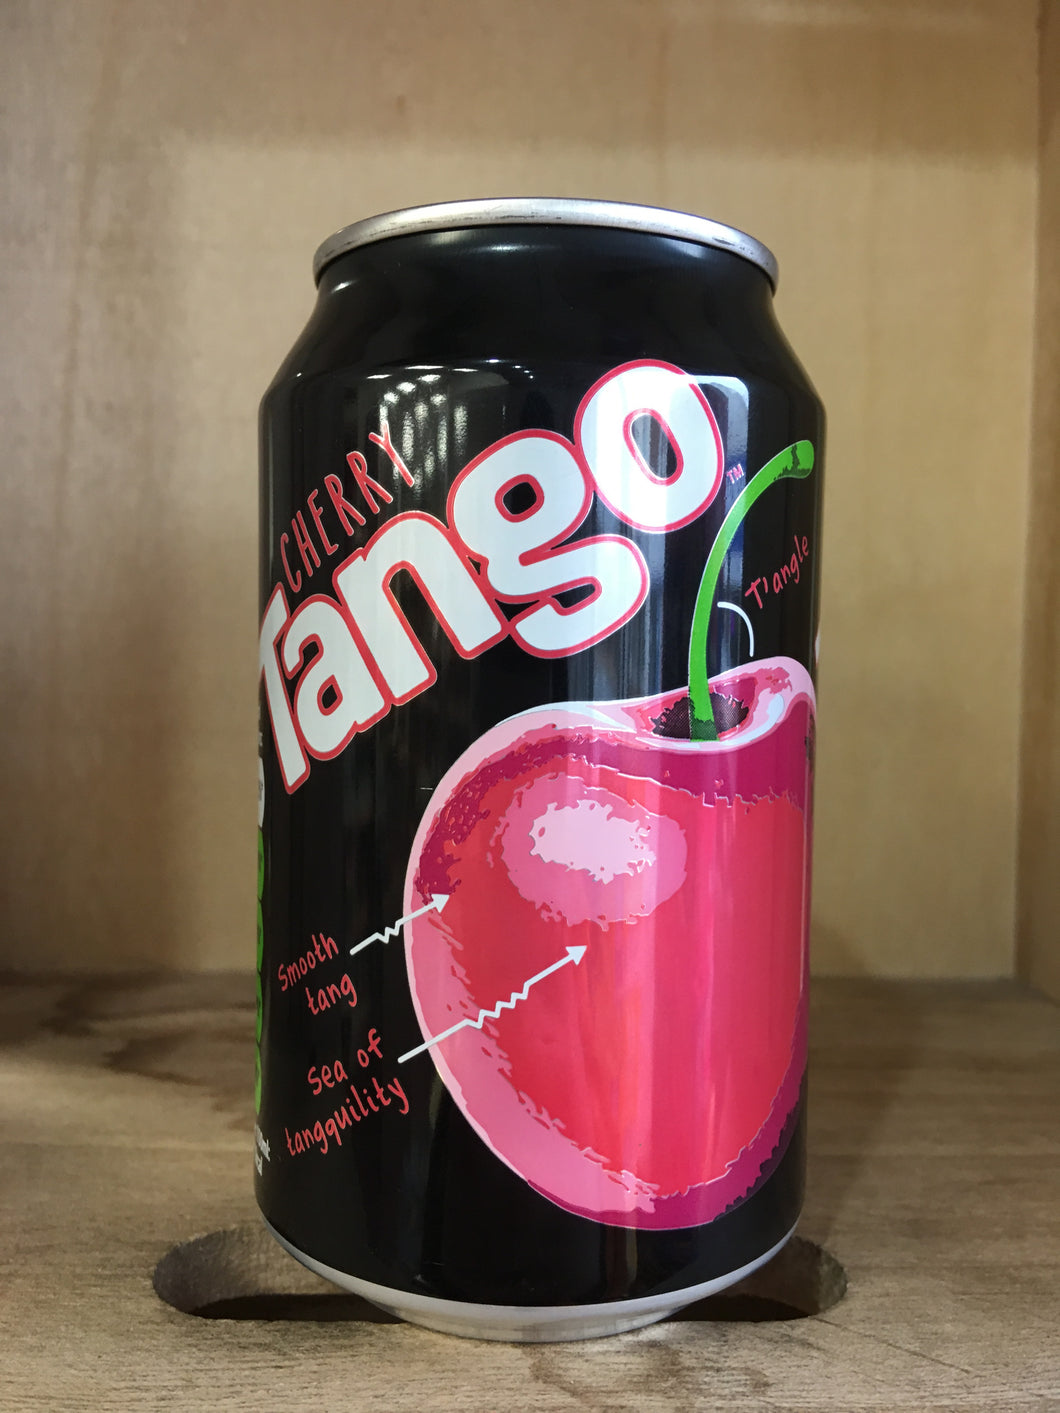 Tango Cherry 330ml